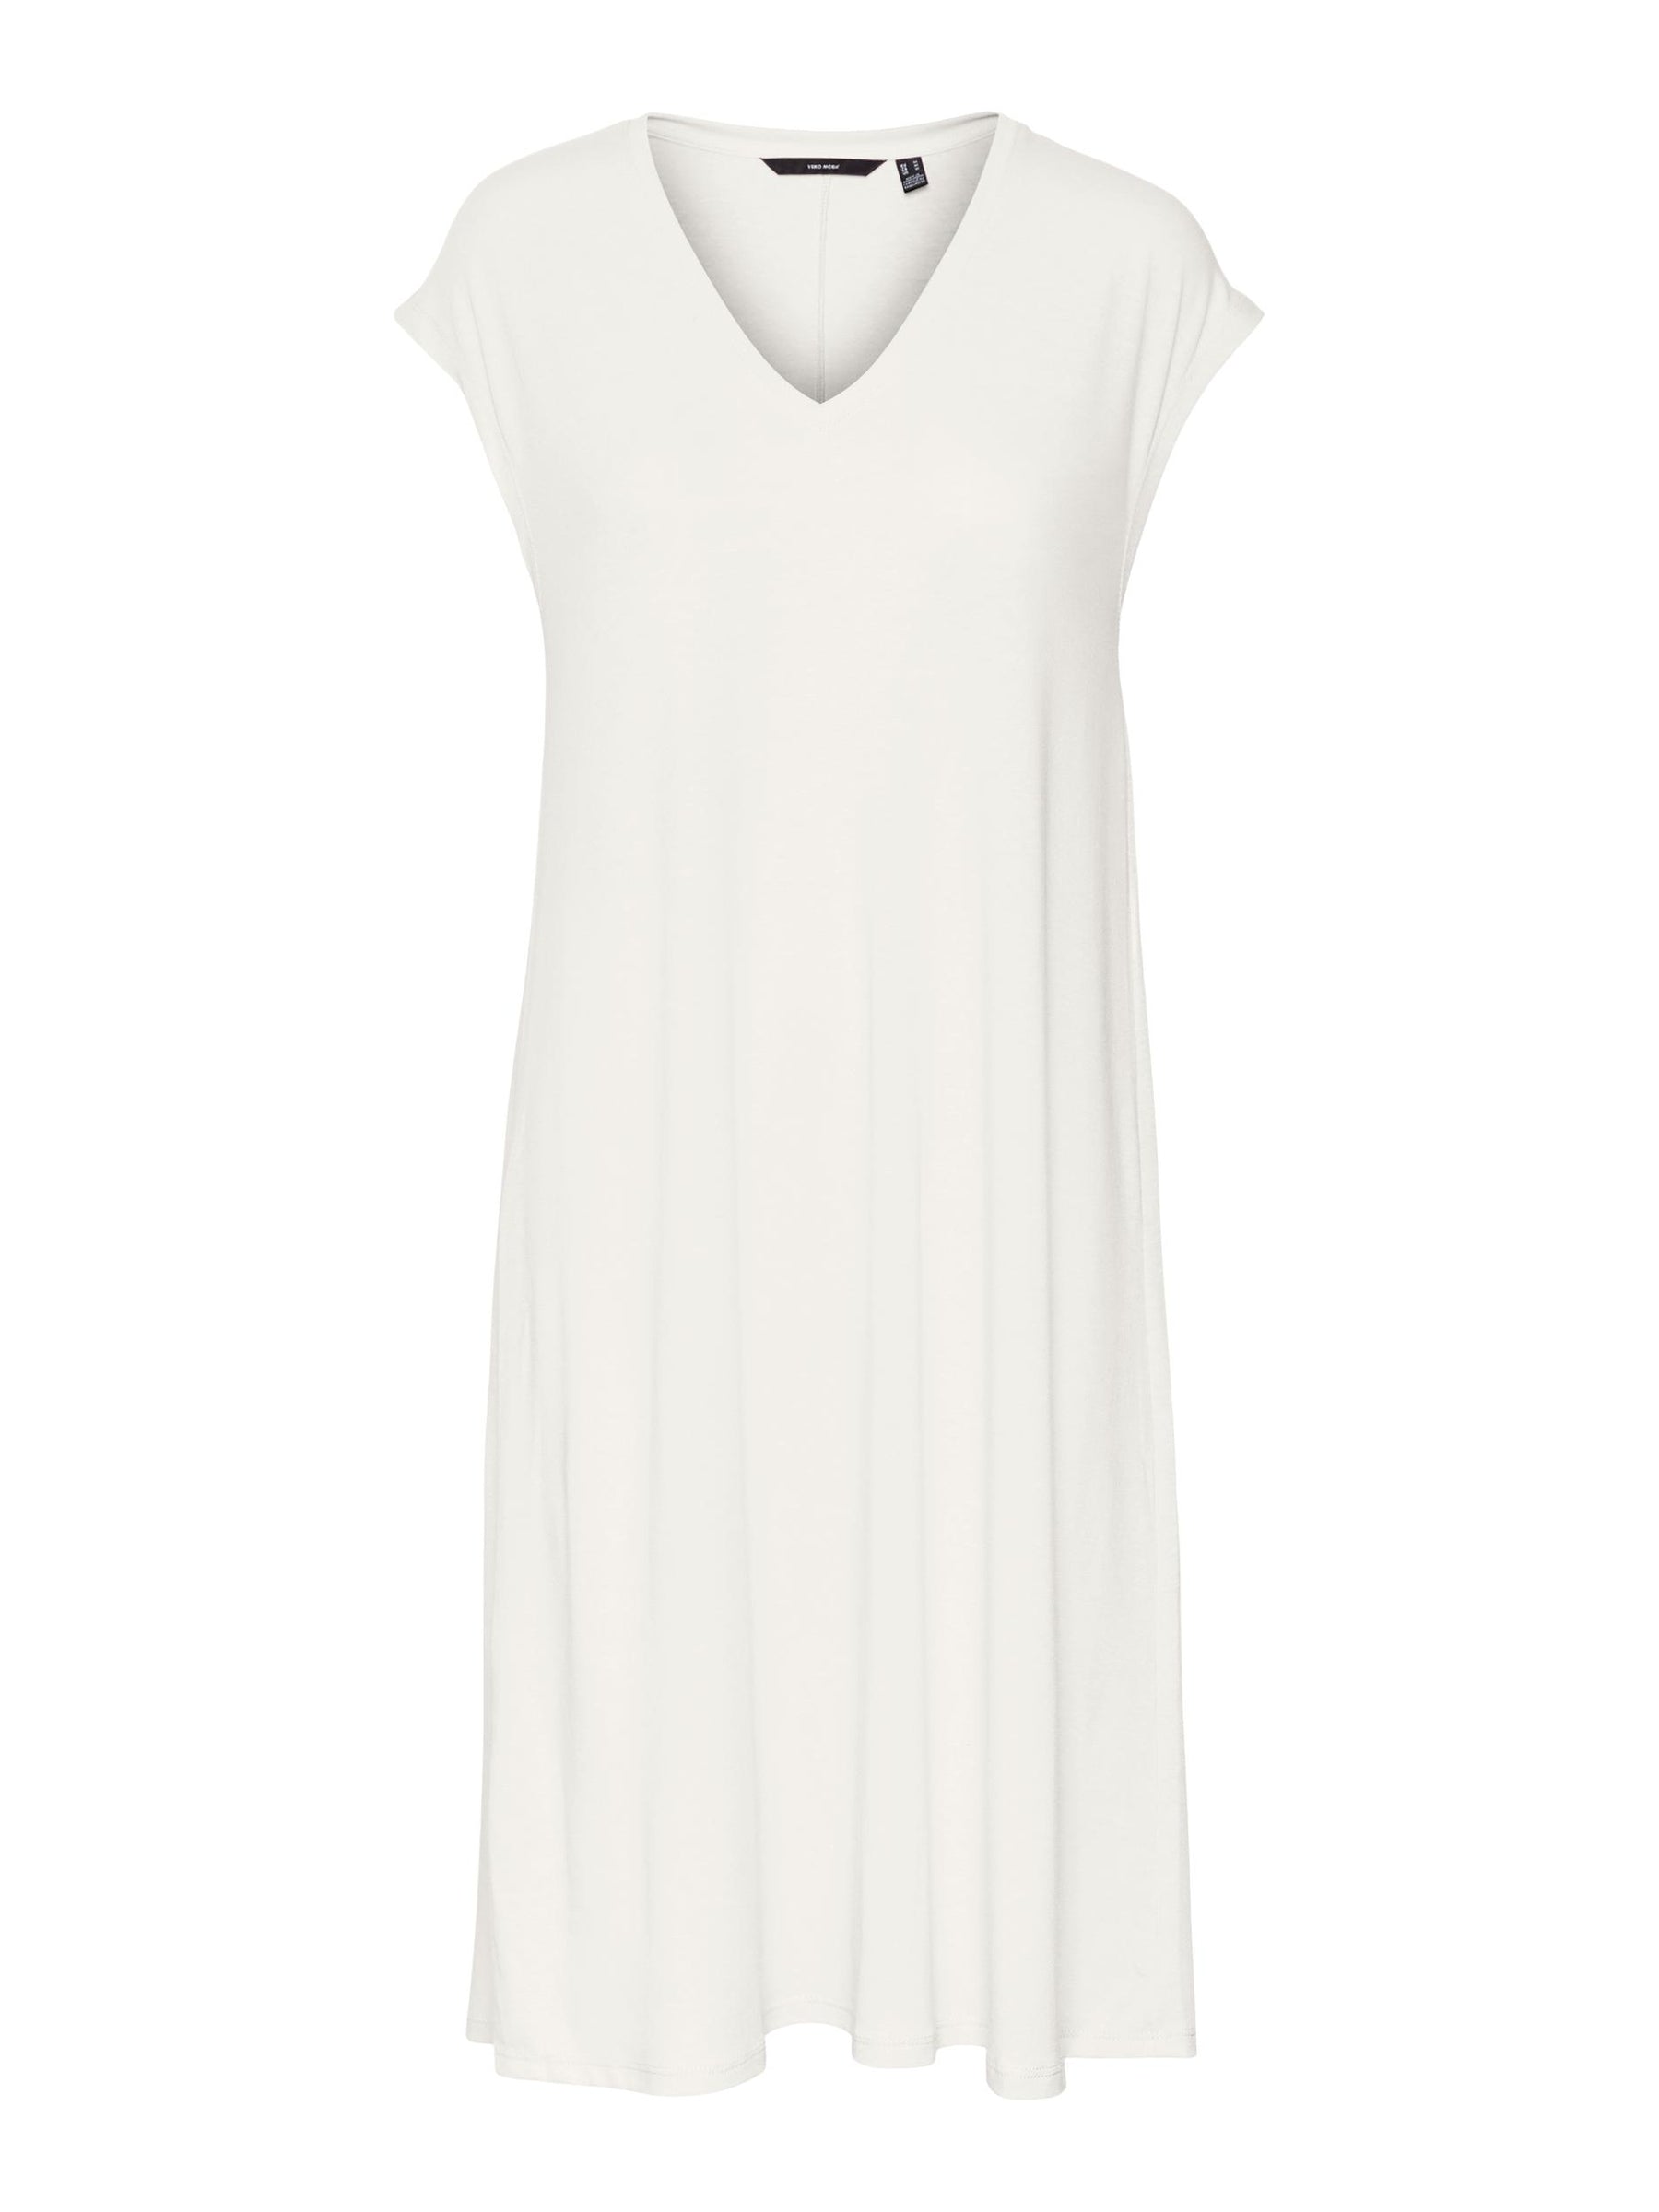 Vero Moda June Dress in White